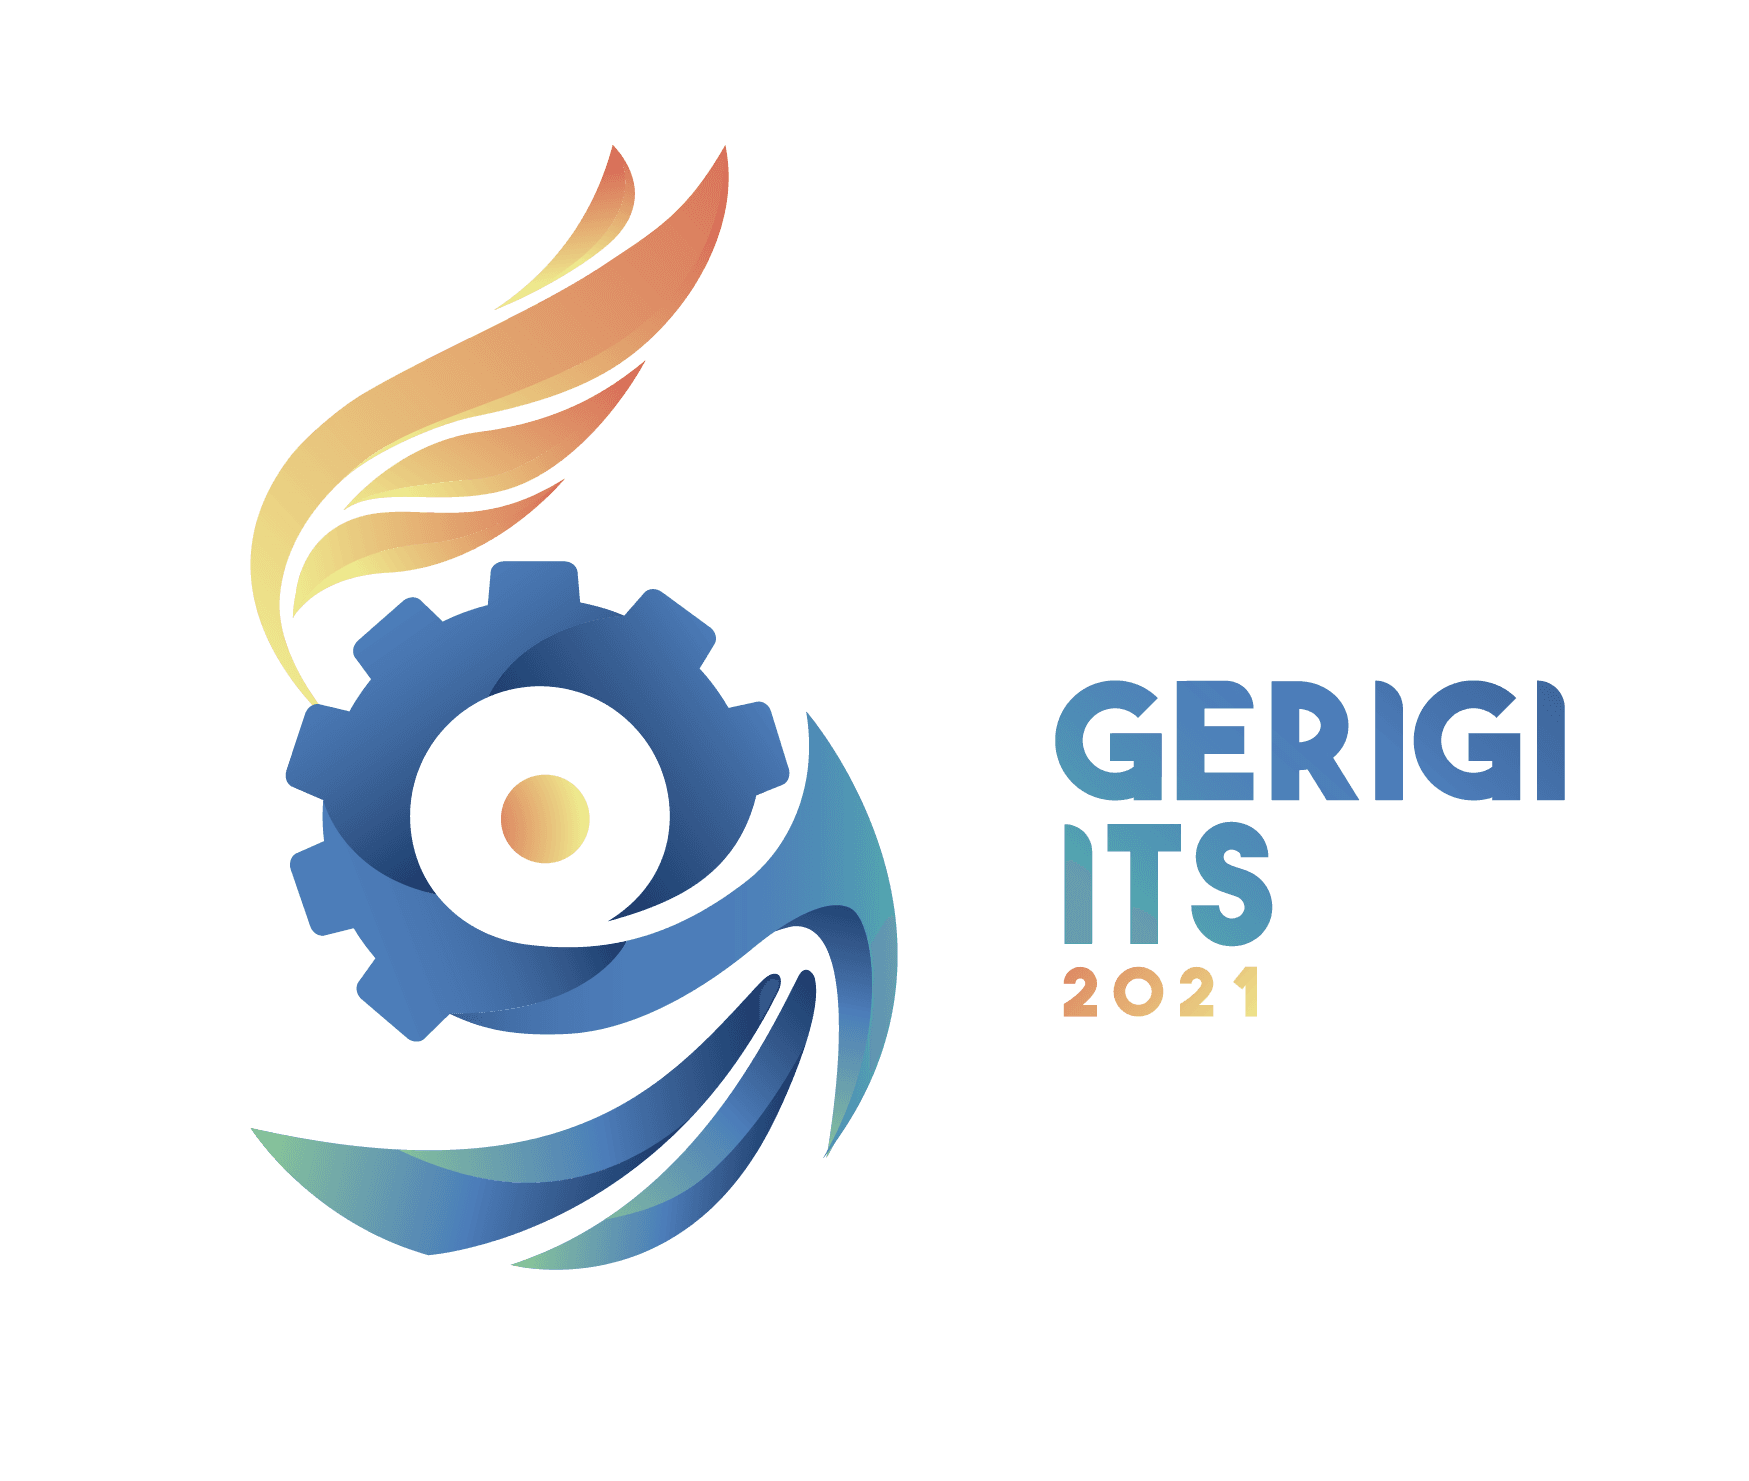 GERIGI (Generasi Integralistik) ITS 2021